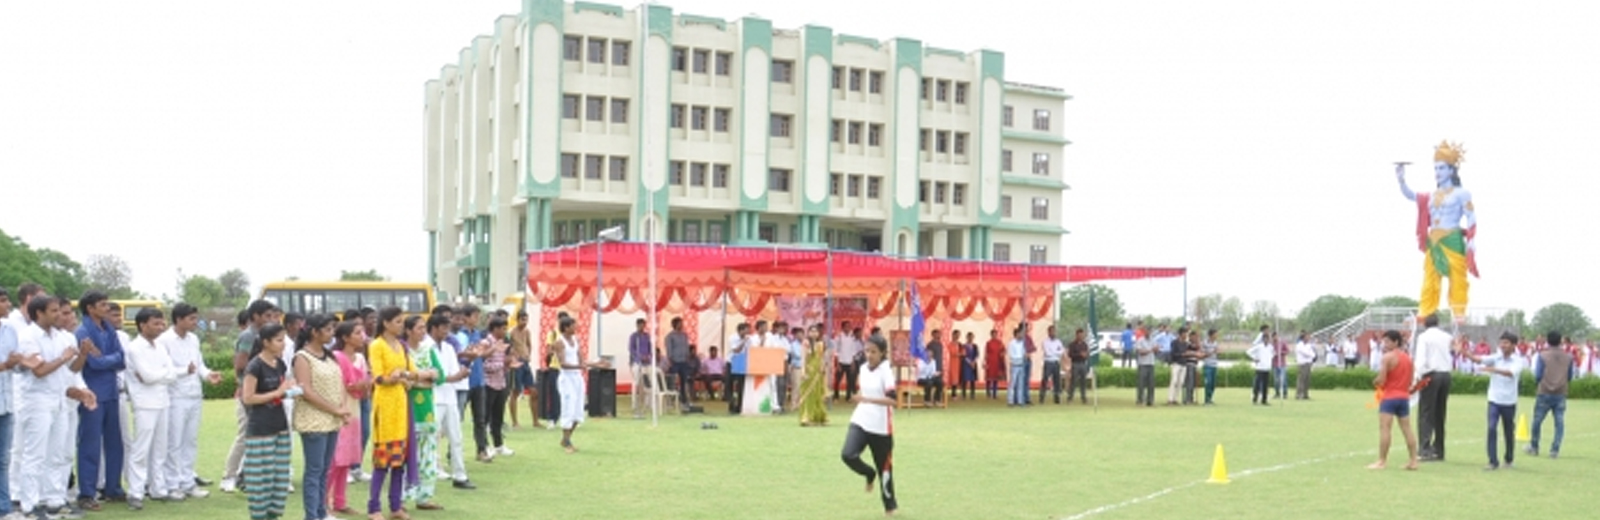 Rao Bahadur Singh Degree College, Mahendragarh Image